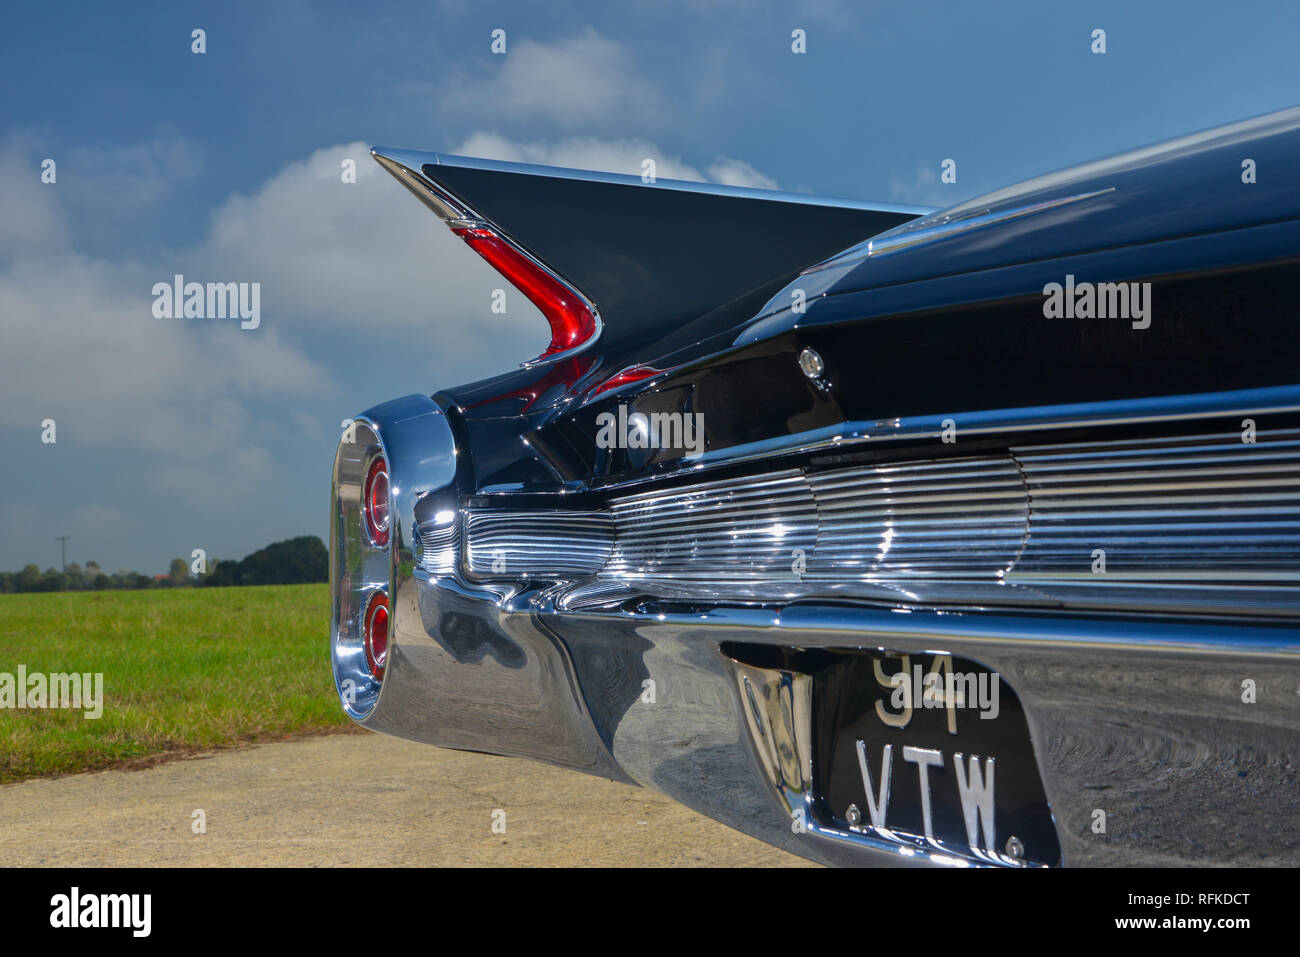 1960 Series 62 Cadillac, classic American car Stock Photo - Alamy